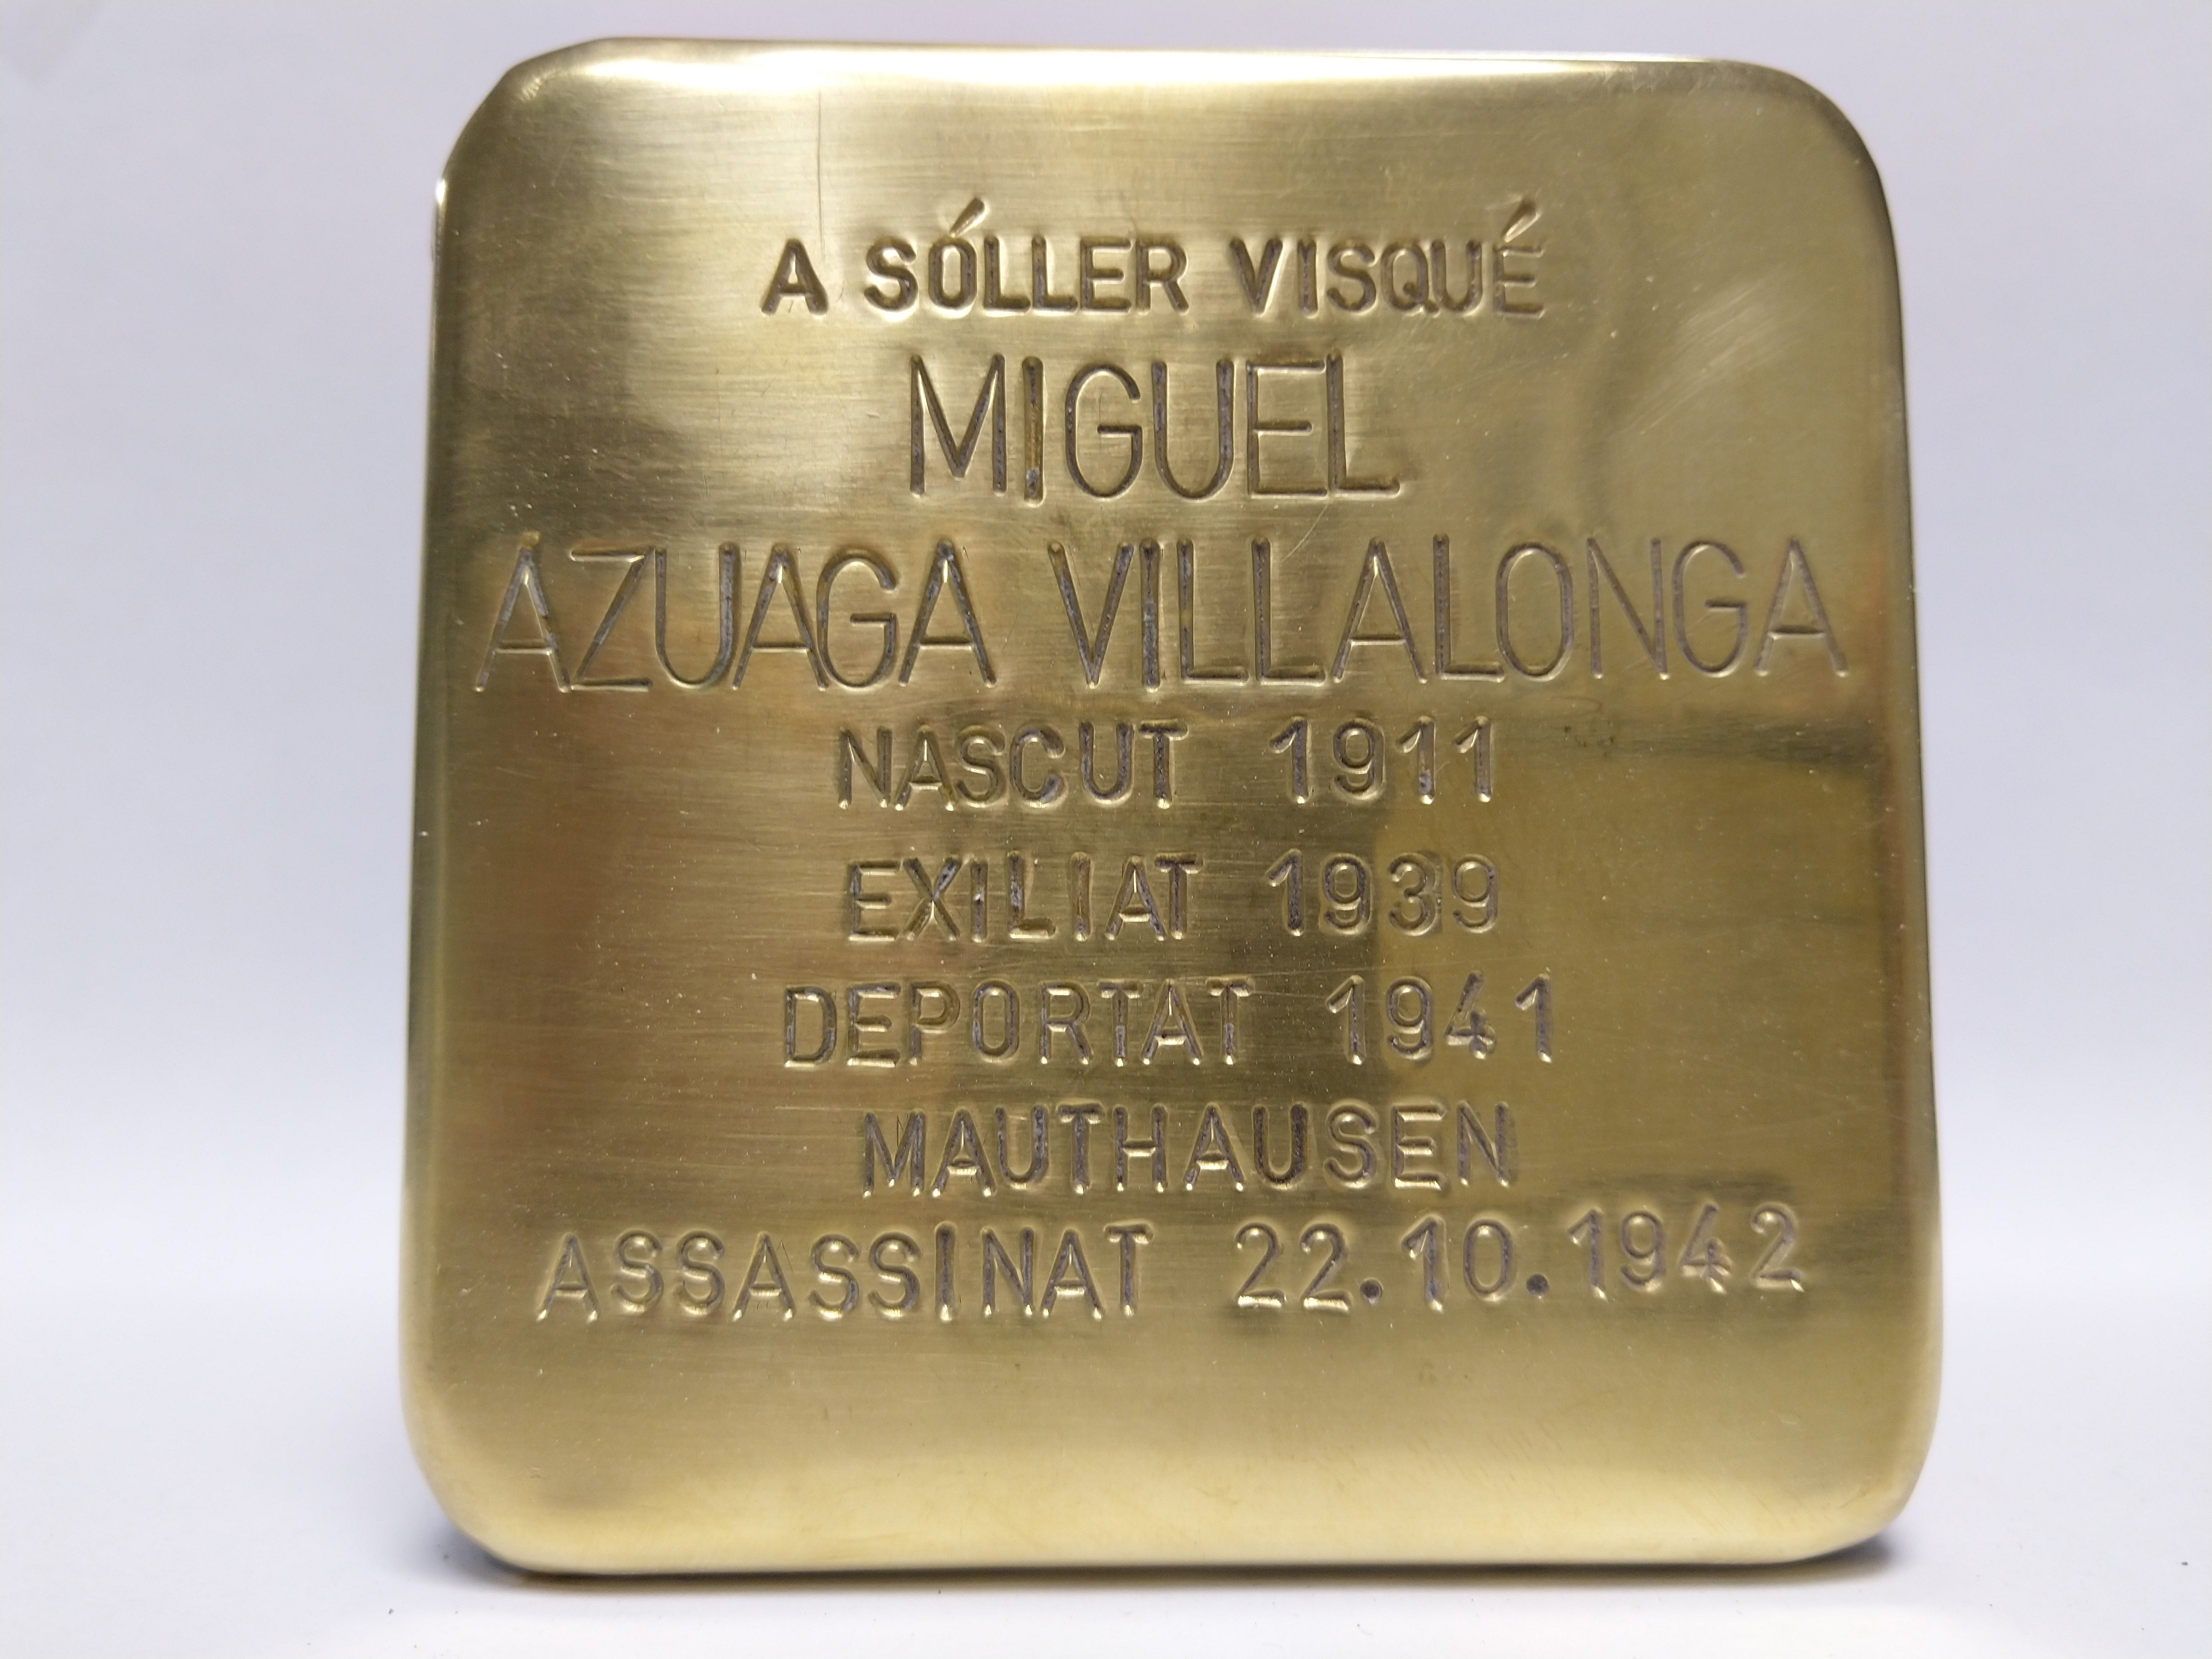 Miguel Azuaga Villalonga 